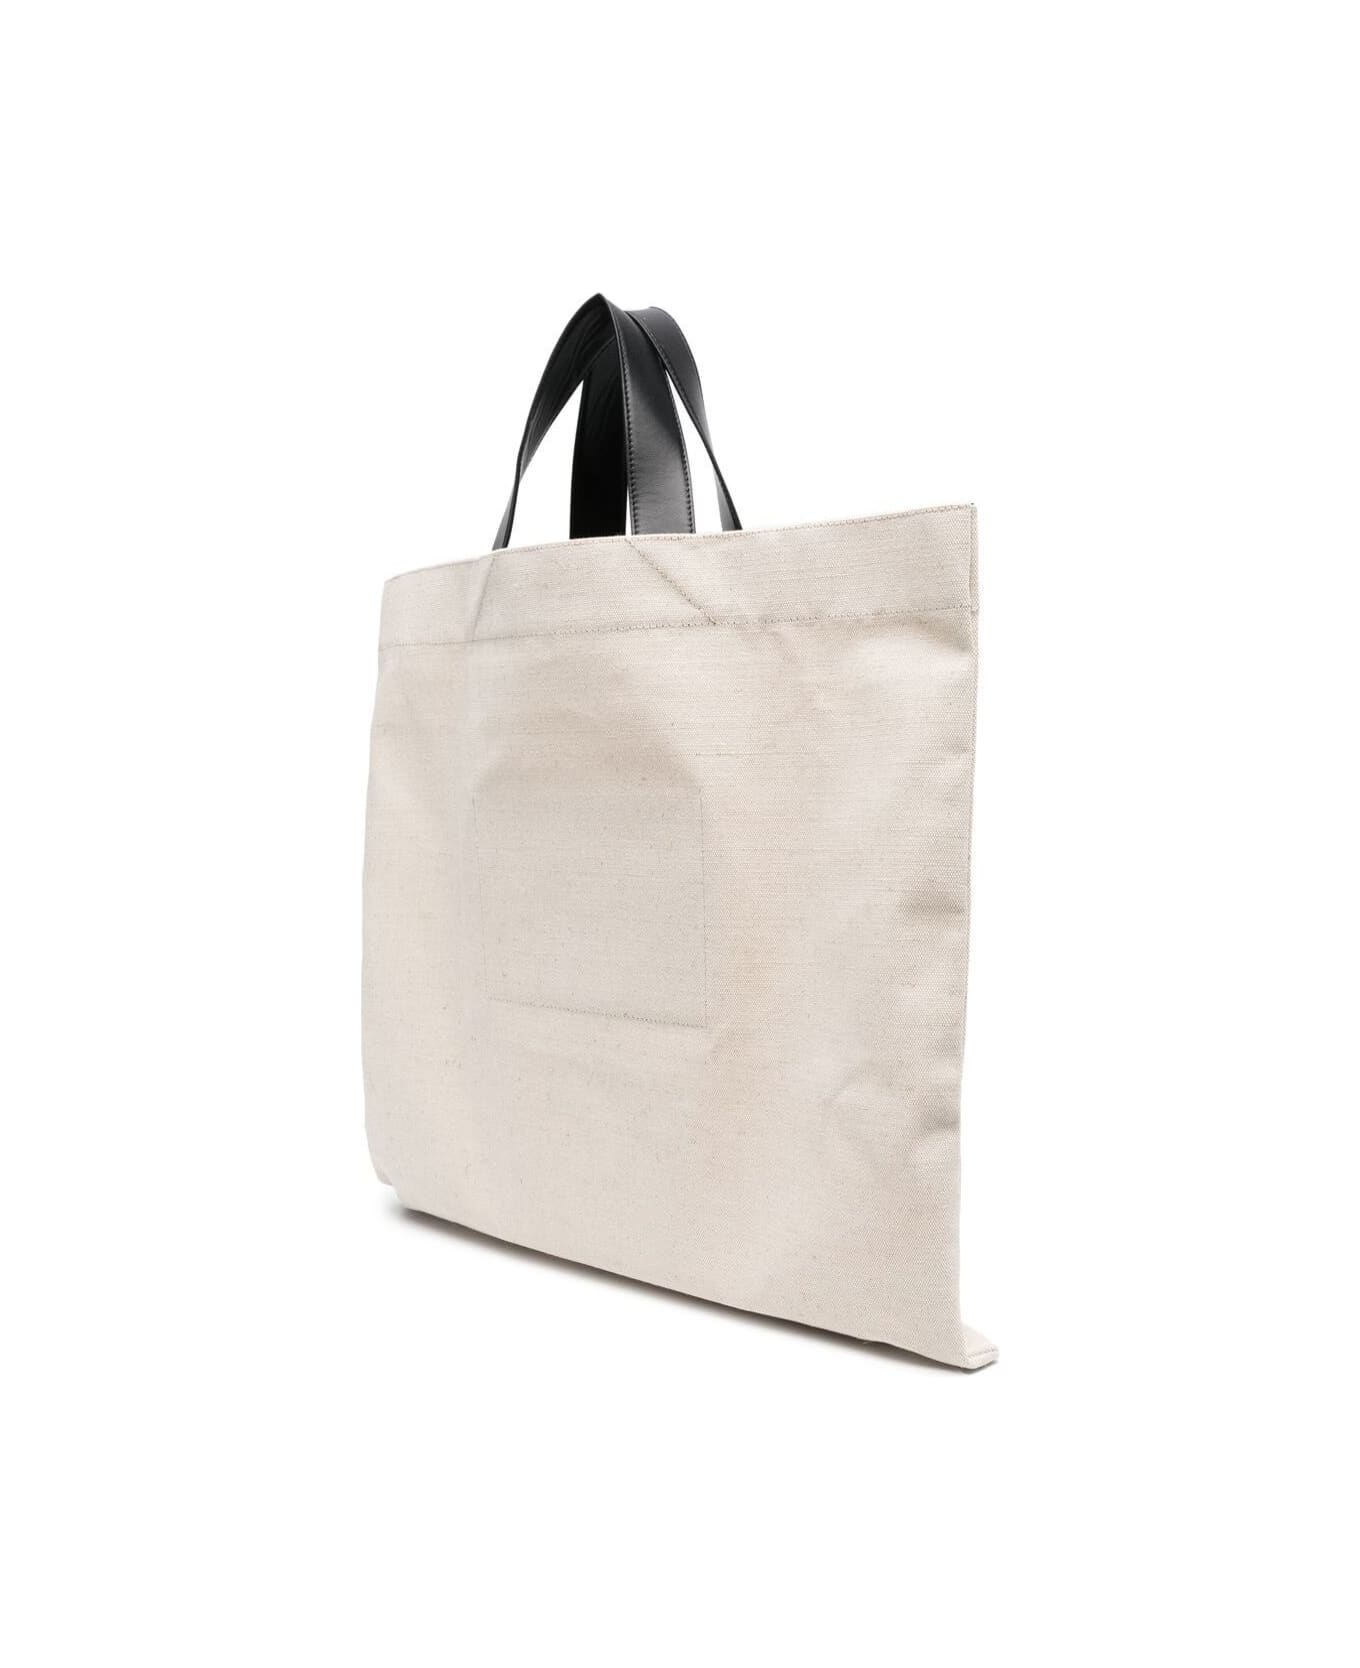 Jil Sander White Tote Bag With Logo Print In Canvas Man - White